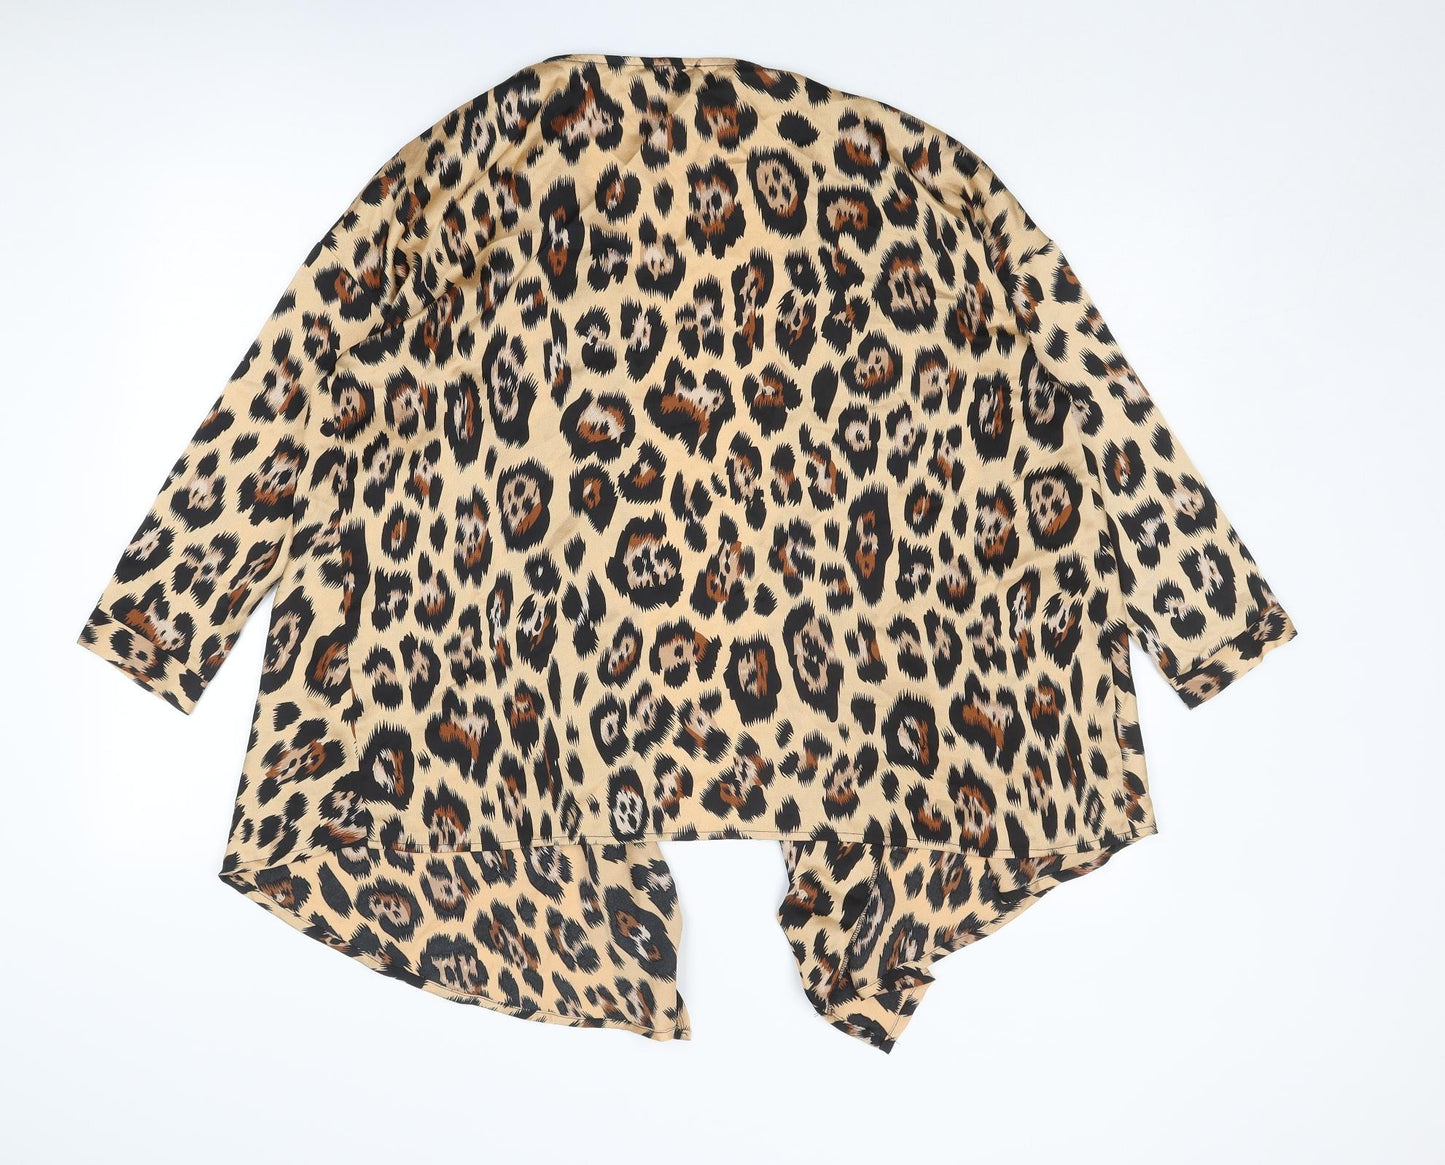 PRETTYLITTLETHING Womens Brown Animal Print Polyester Kimono Blouse Size 6 V-Neck - Leopard Print